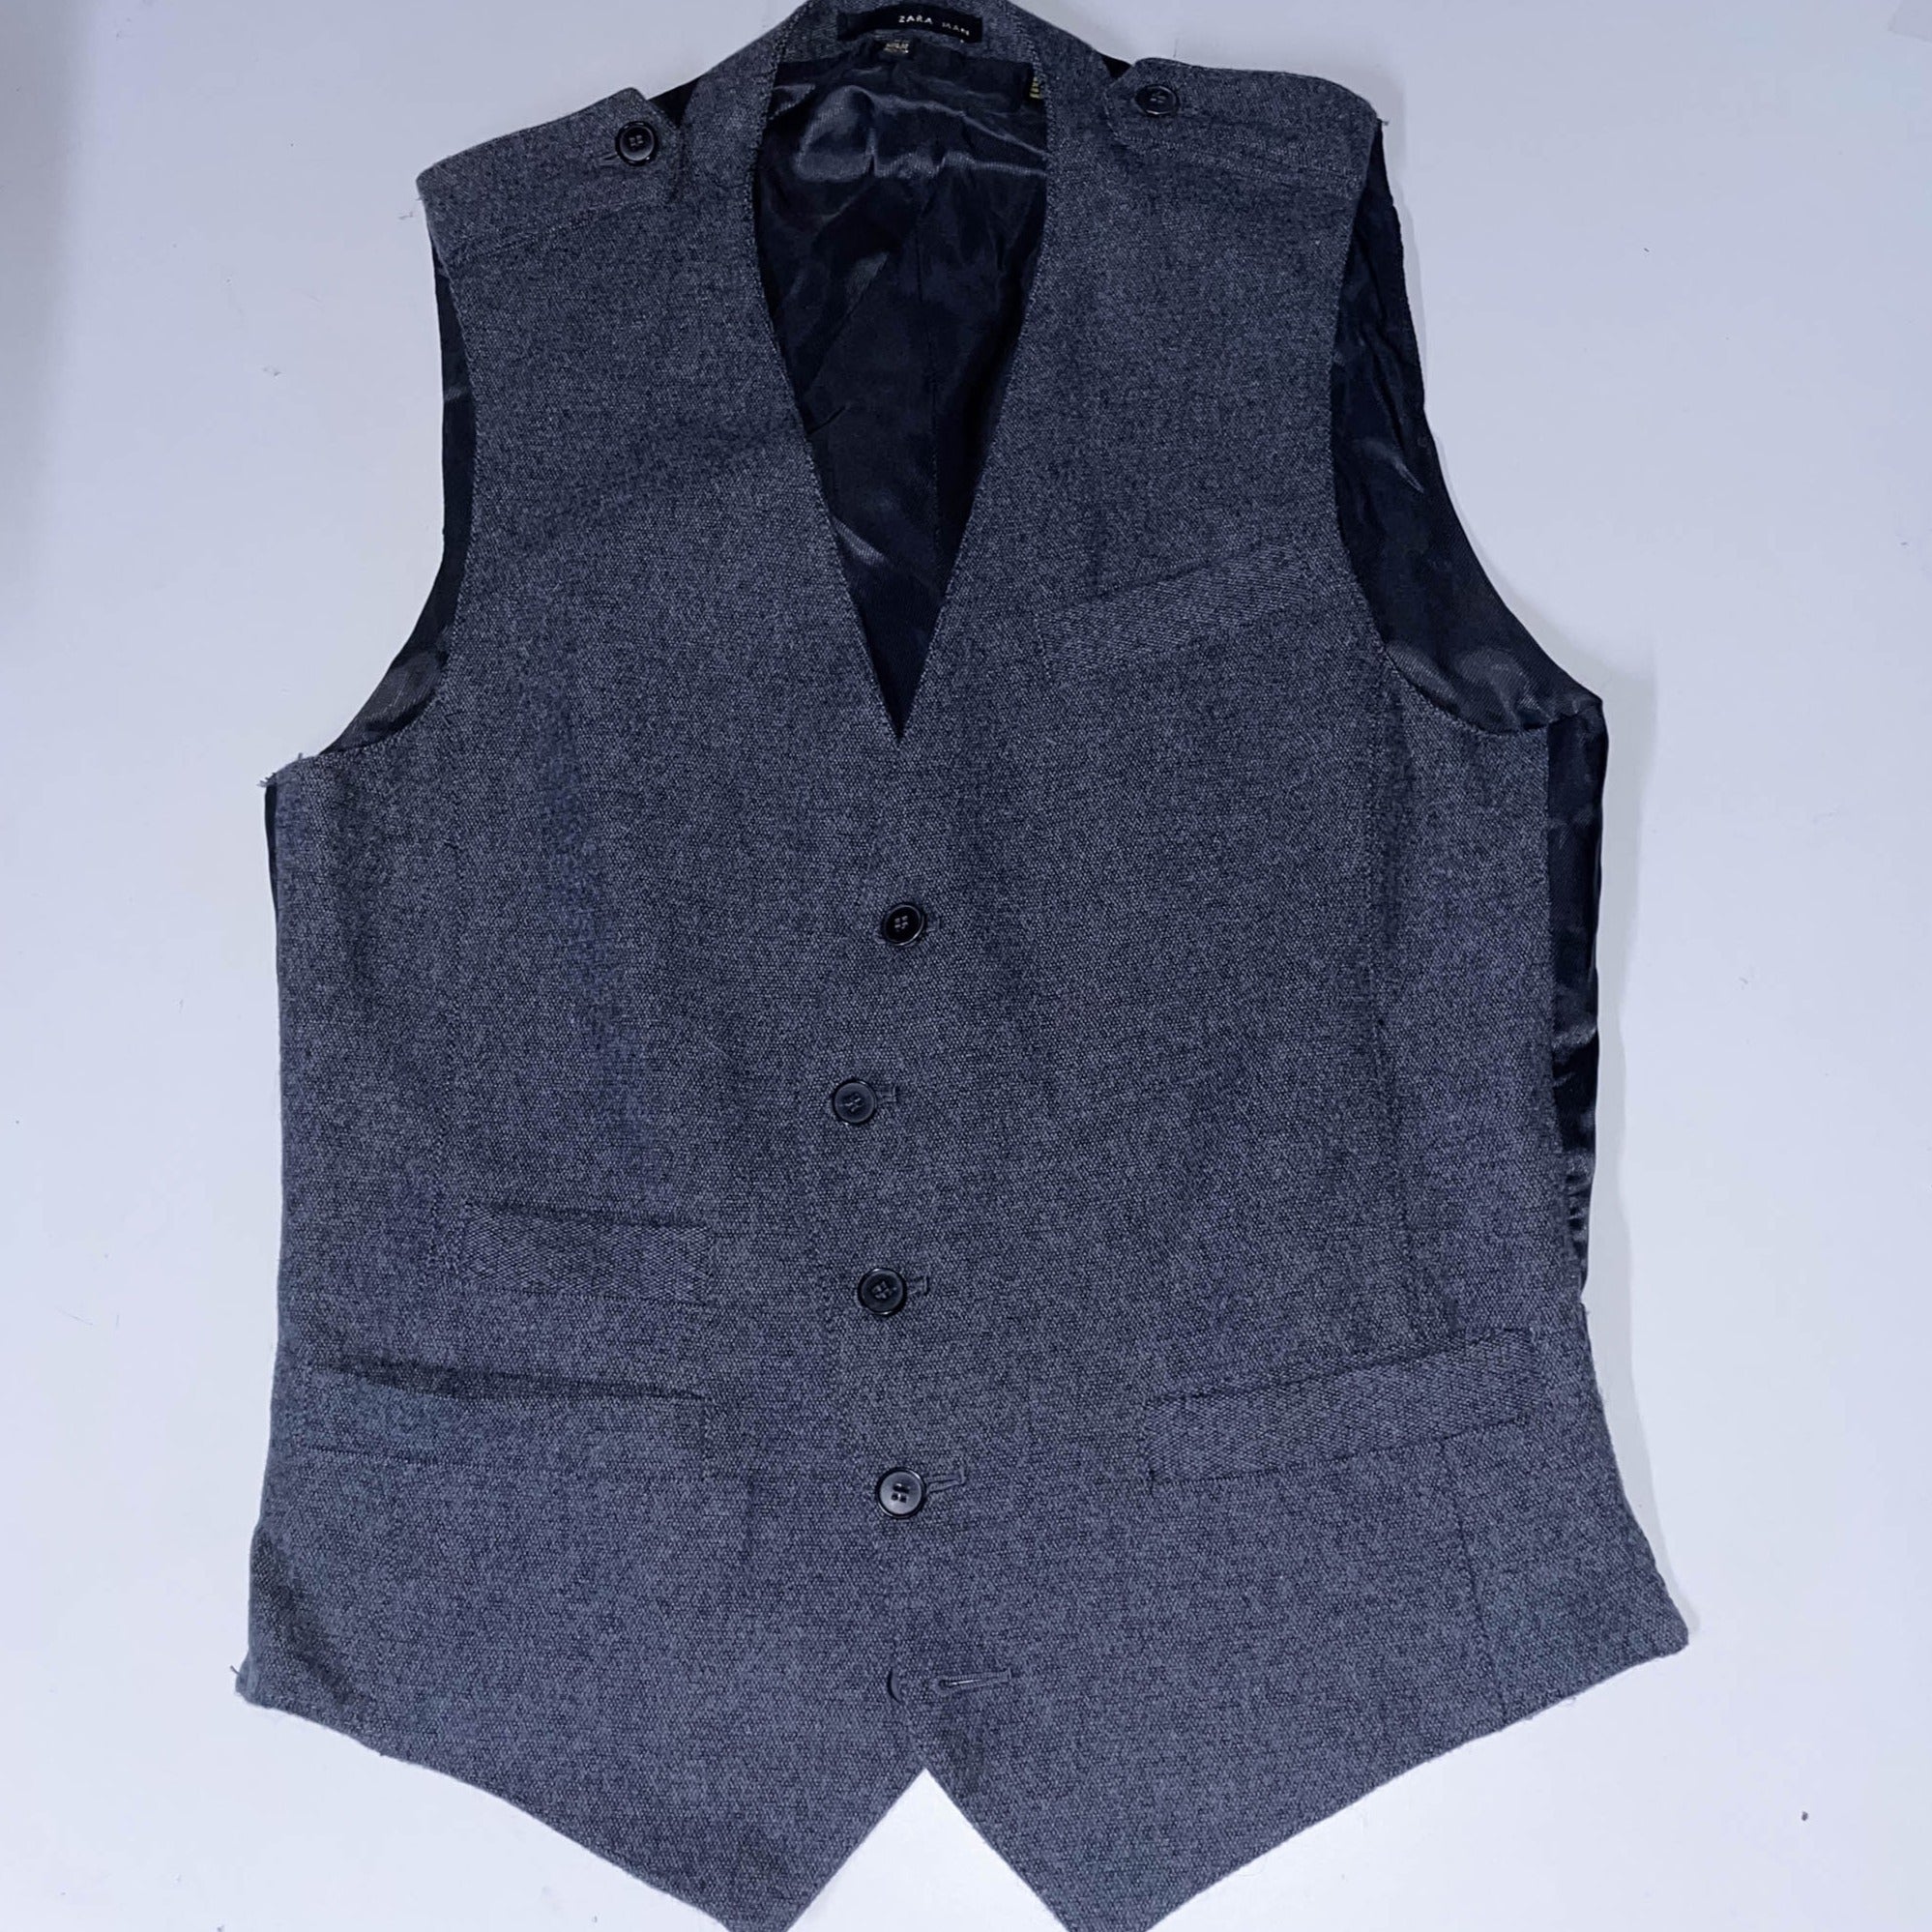 Vintage Zara Man formal suit vest grey medium jacket